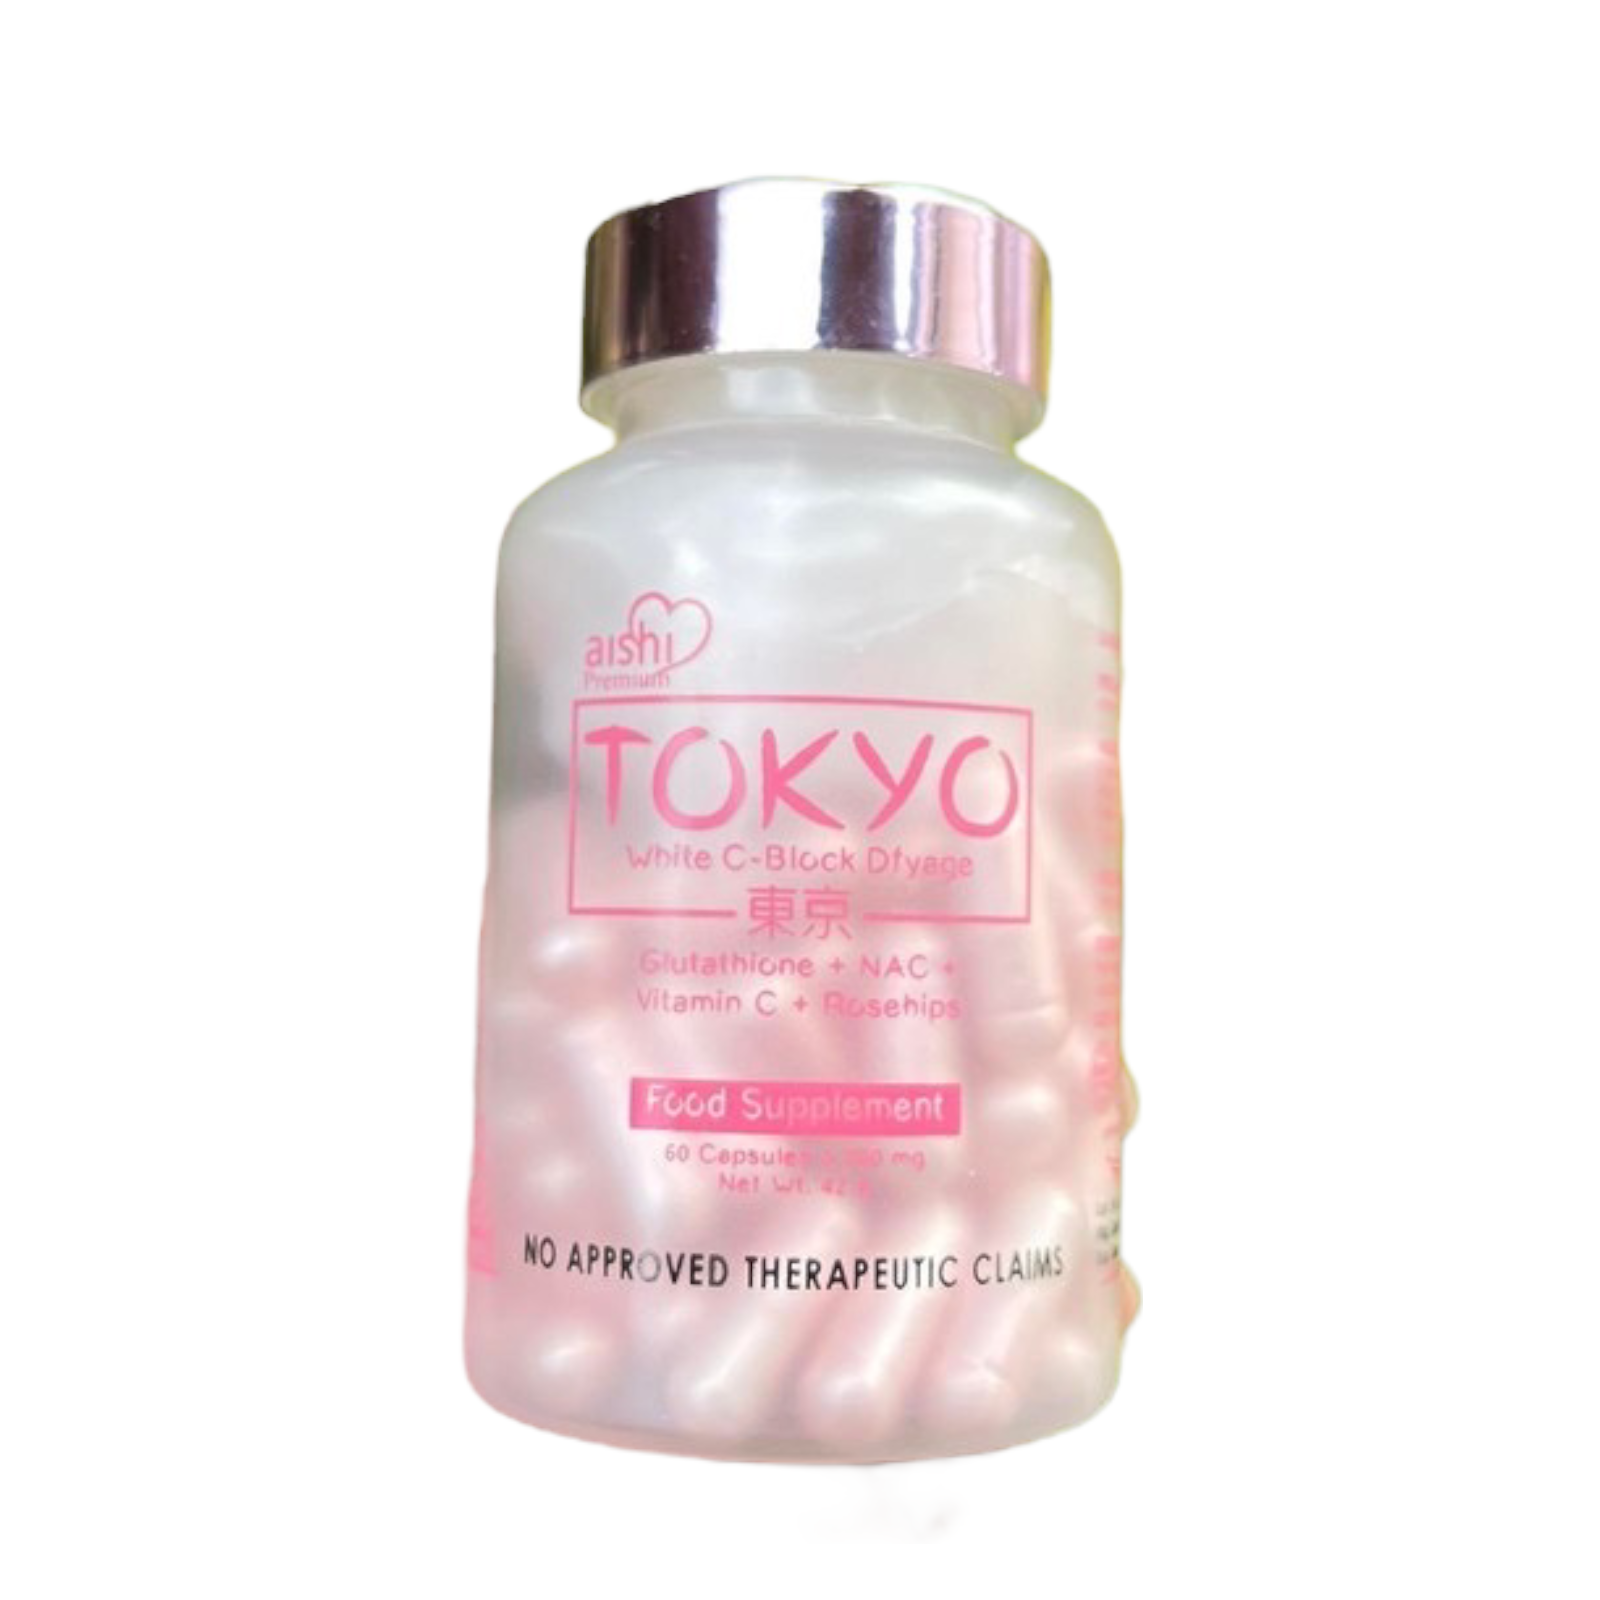 Aishi - TOKYO White C-Block Dfyage - Glutathione 60 Capsule